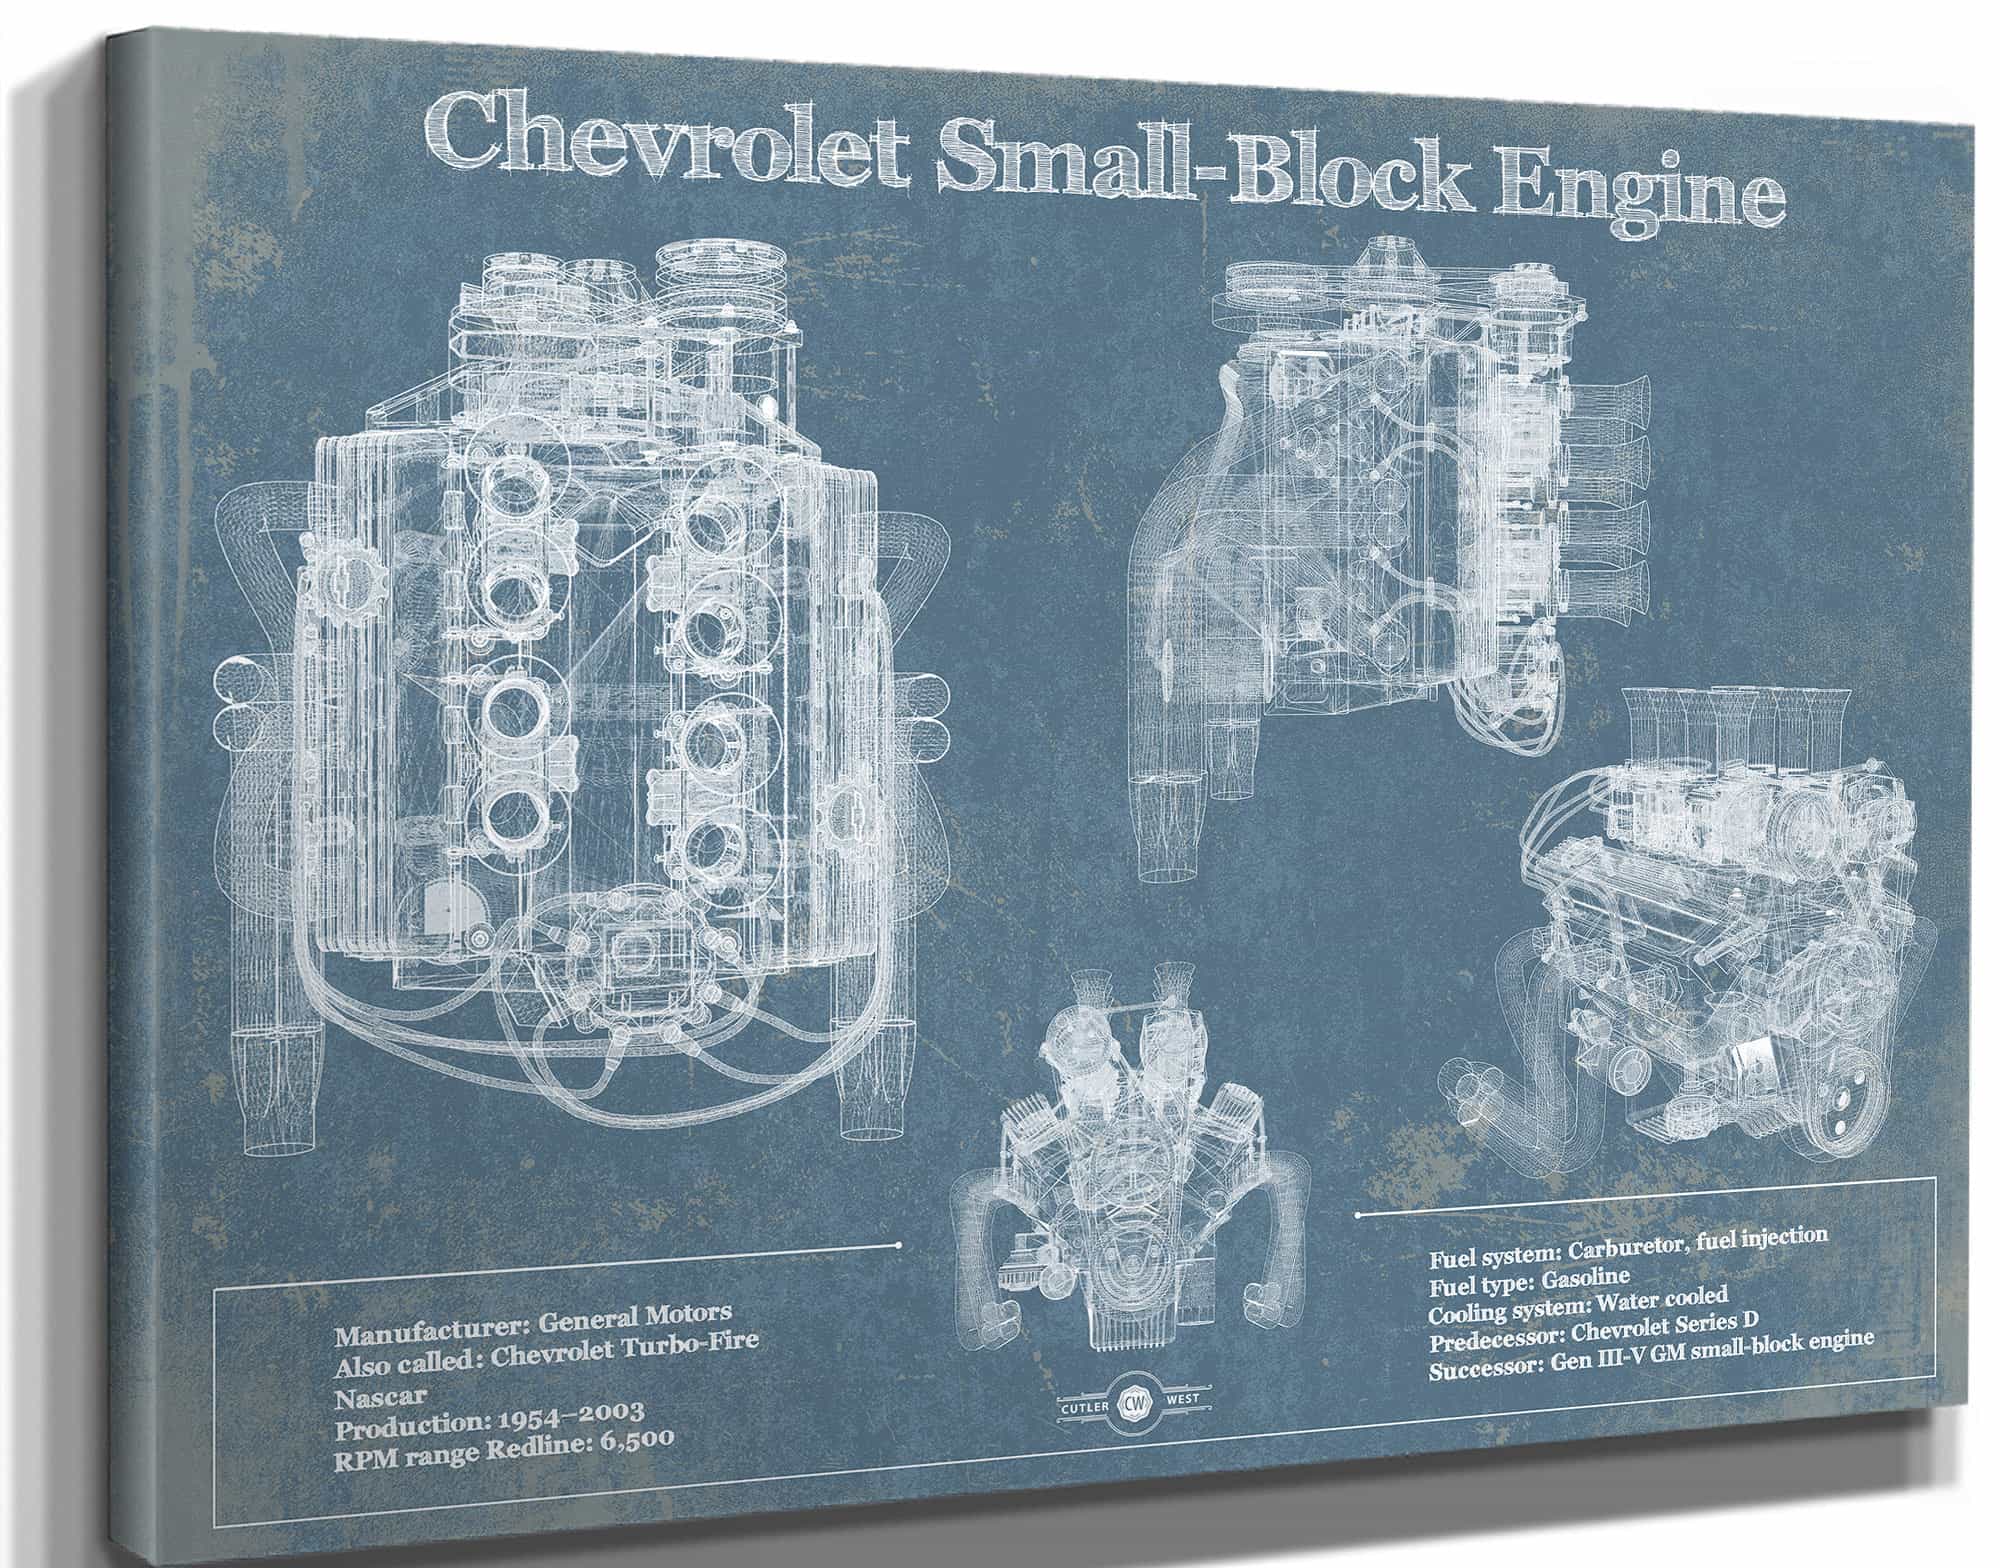 Chevrolet Small-Block Engine Vintage Blueprint Auto Engine Patent Print